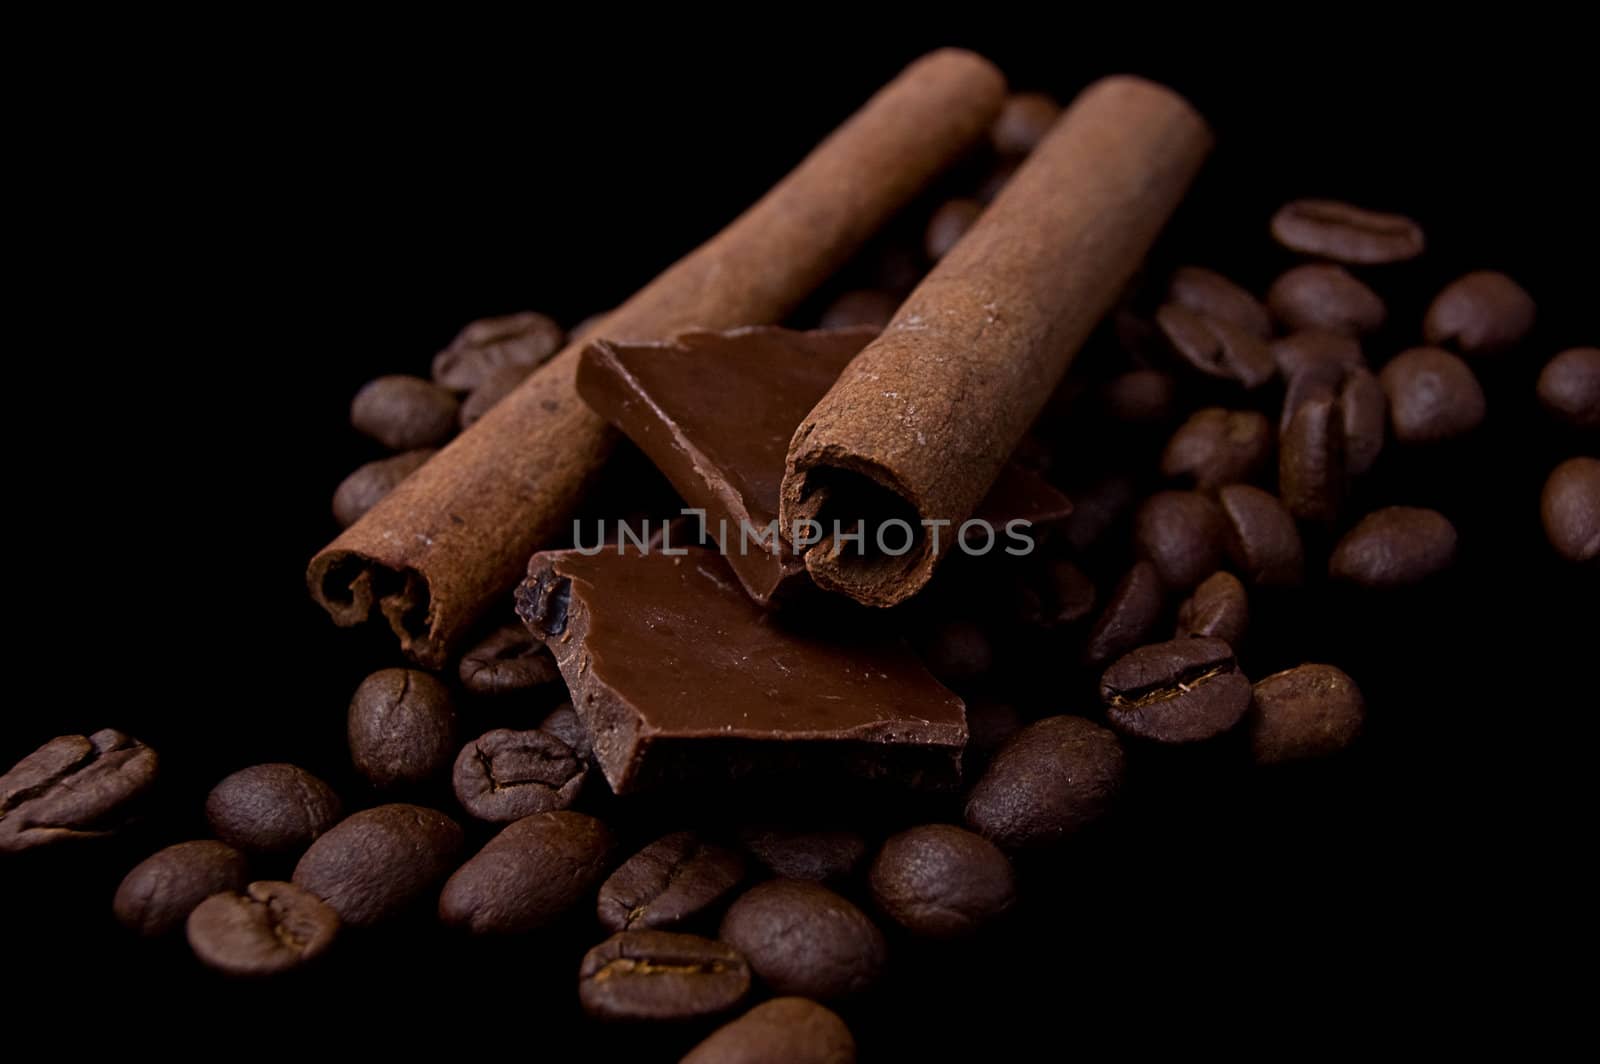 Cinnamon sticks over coffee beans and chocolate on black